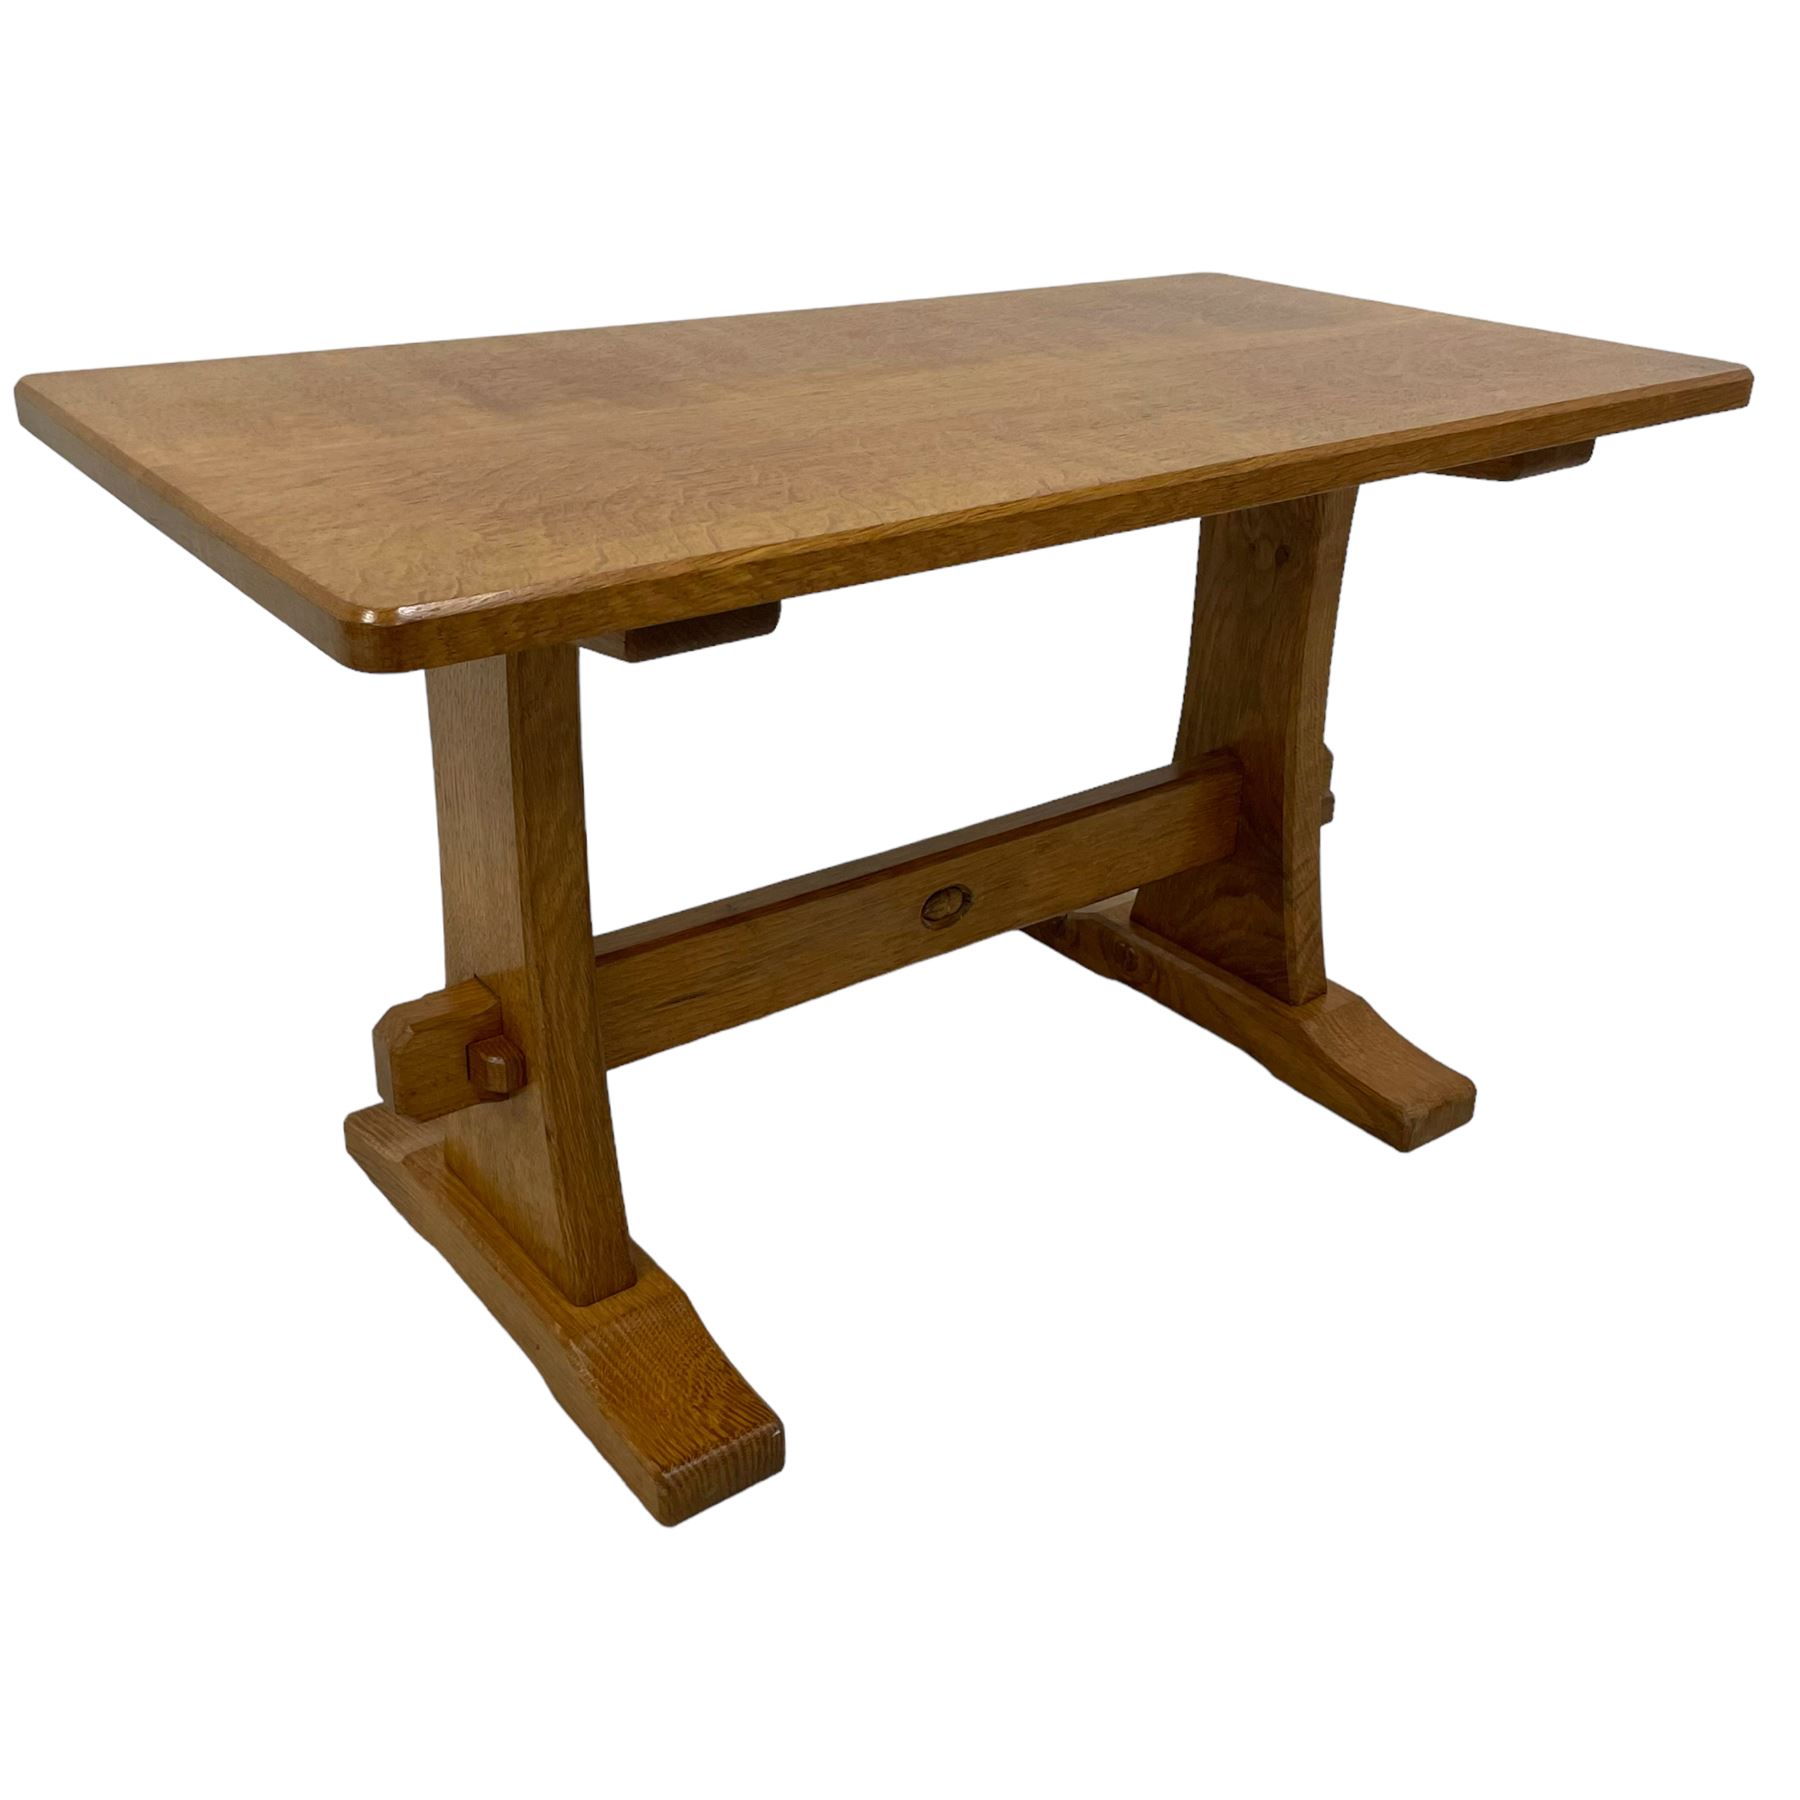 Acornman - oak coffee table - Image 3 of 6